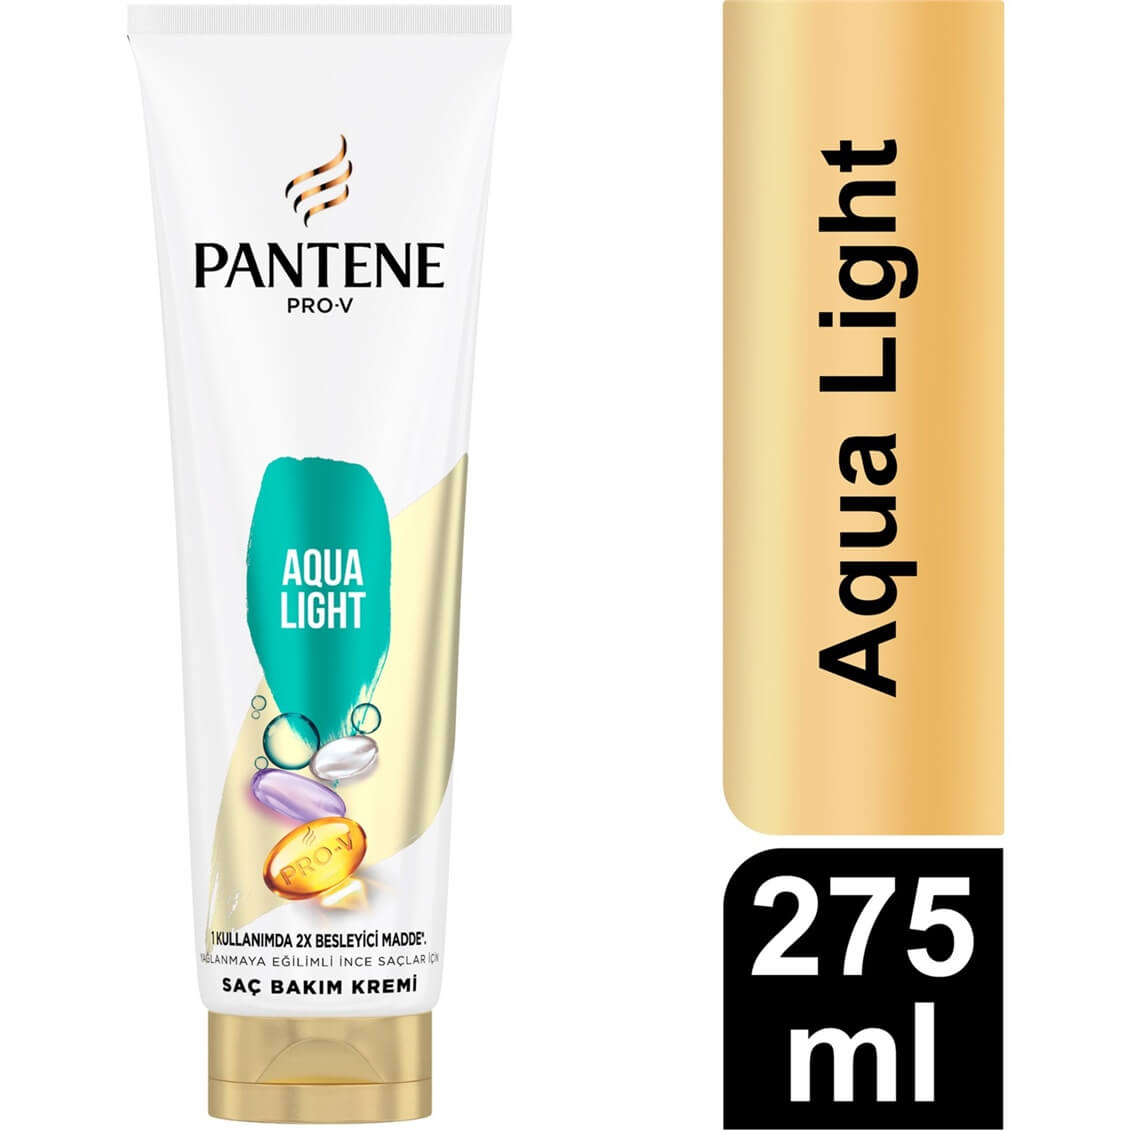 Pantene Aqua Light Saç Bakım Kremi 275 ml - Onur Market